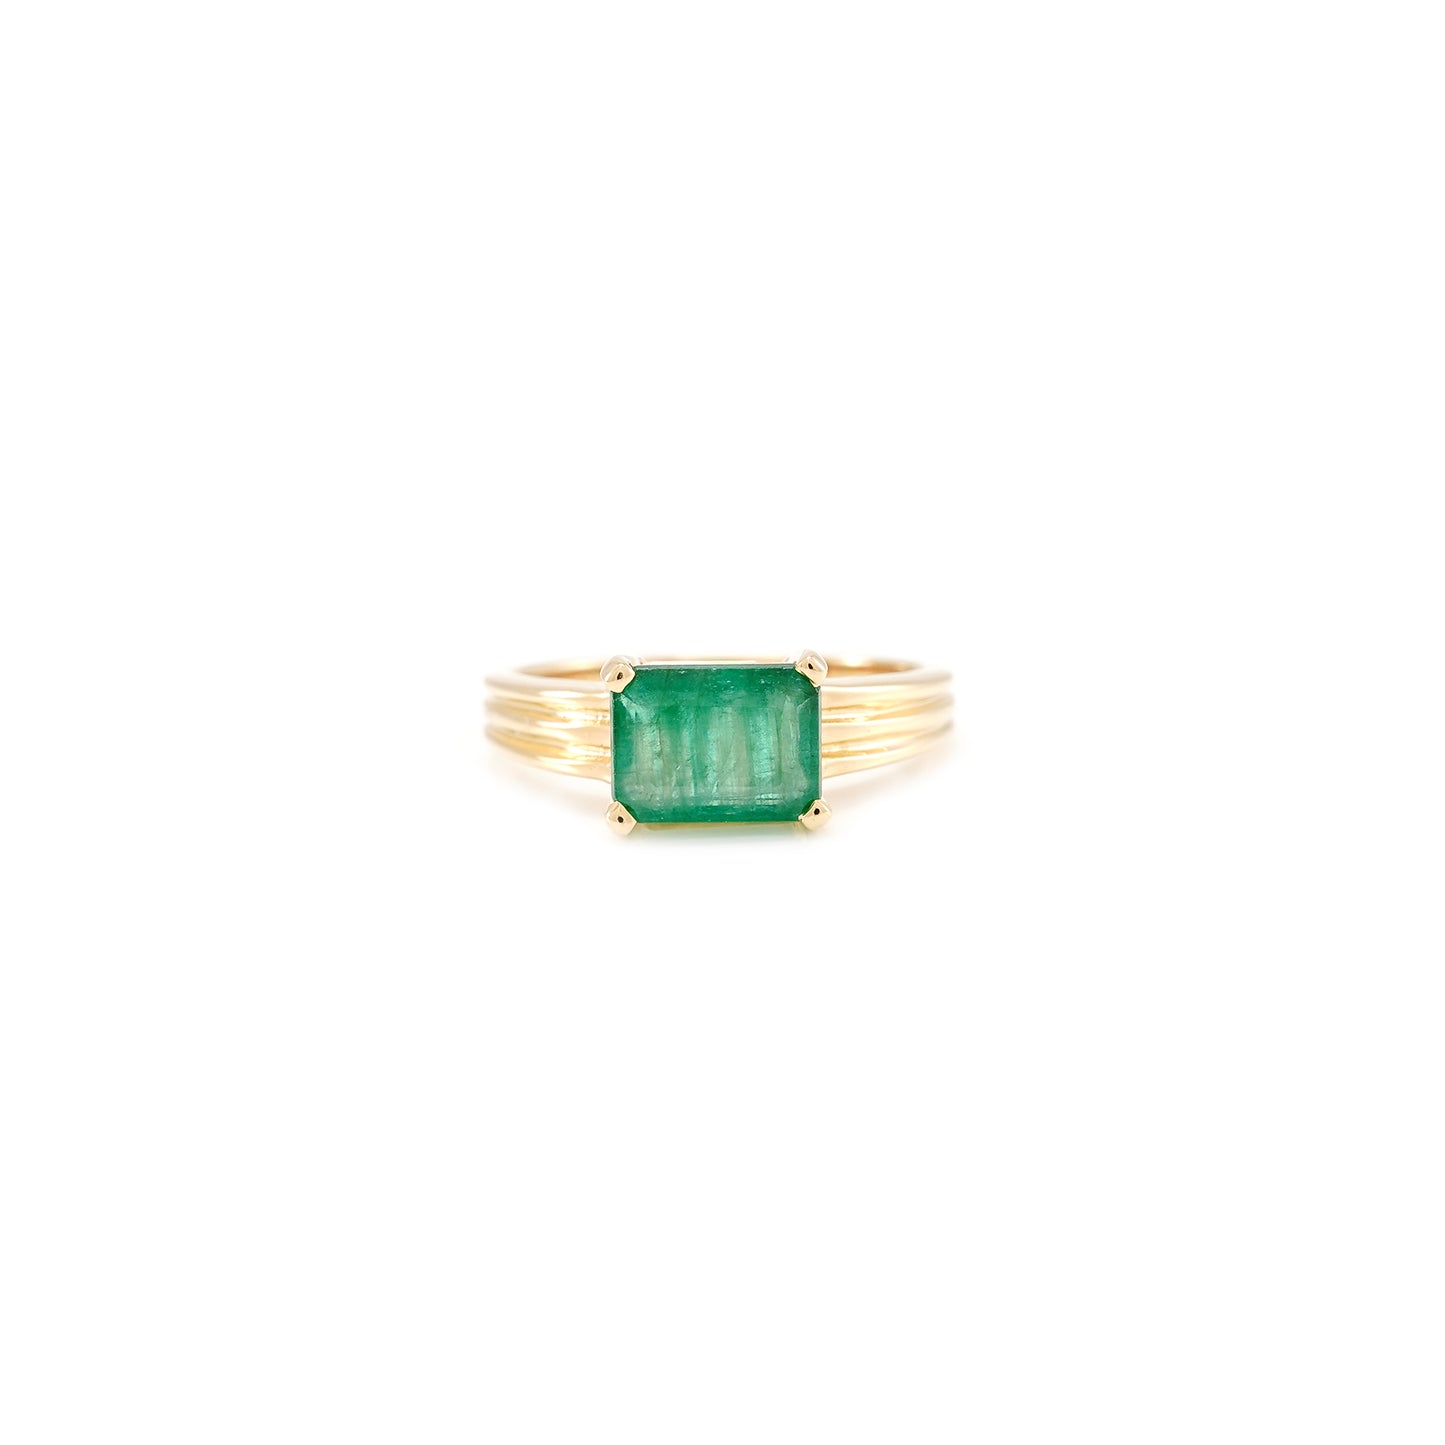 Vintage Smaragd Ring Gelbgold 18K Damenschmuck Goldring Edelsteinschmuck emerald ring